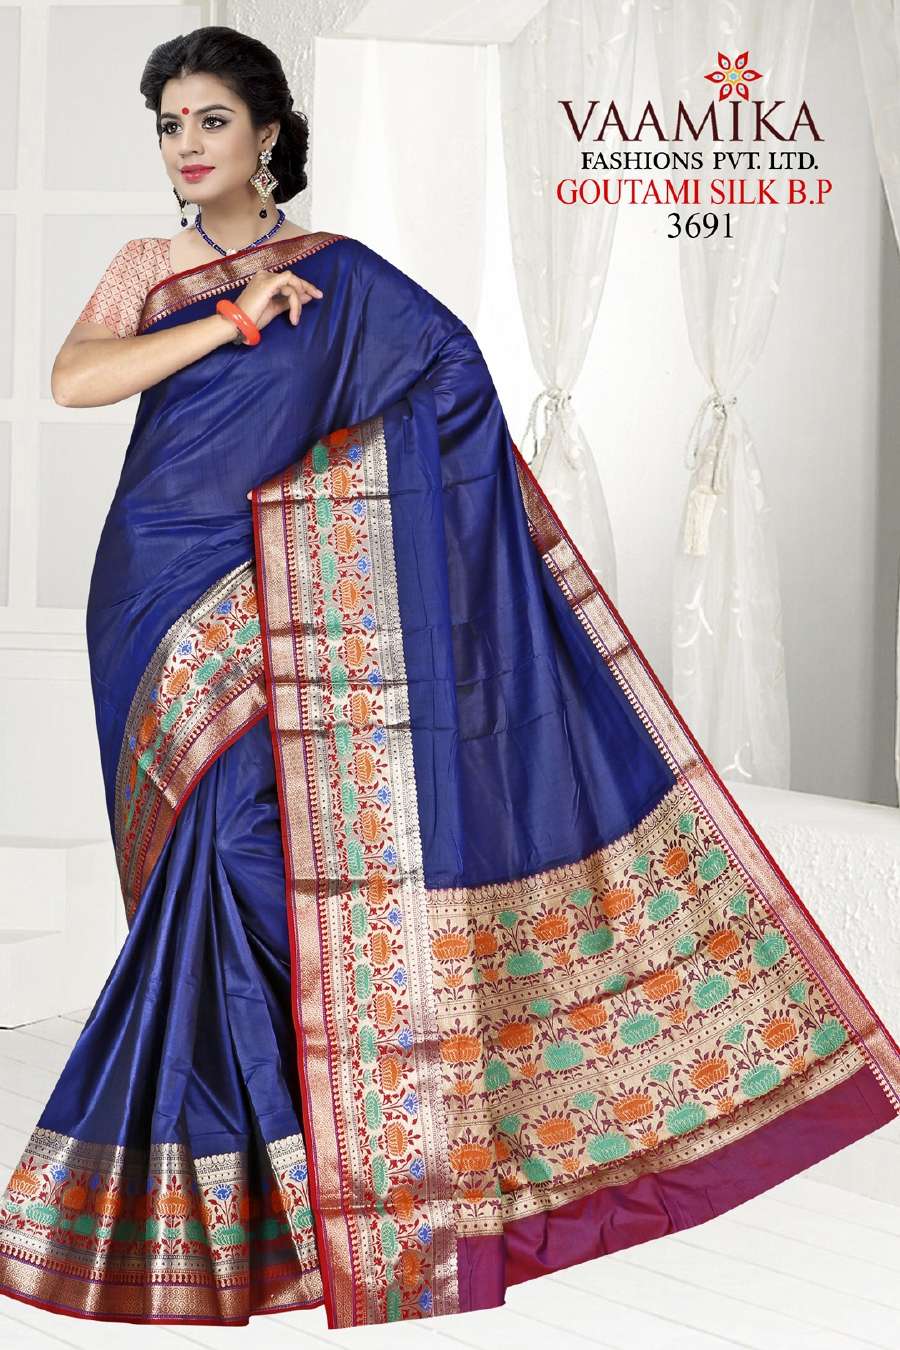 Vaamika Fashions Goutami Silk Fancy Saris Wholesaler